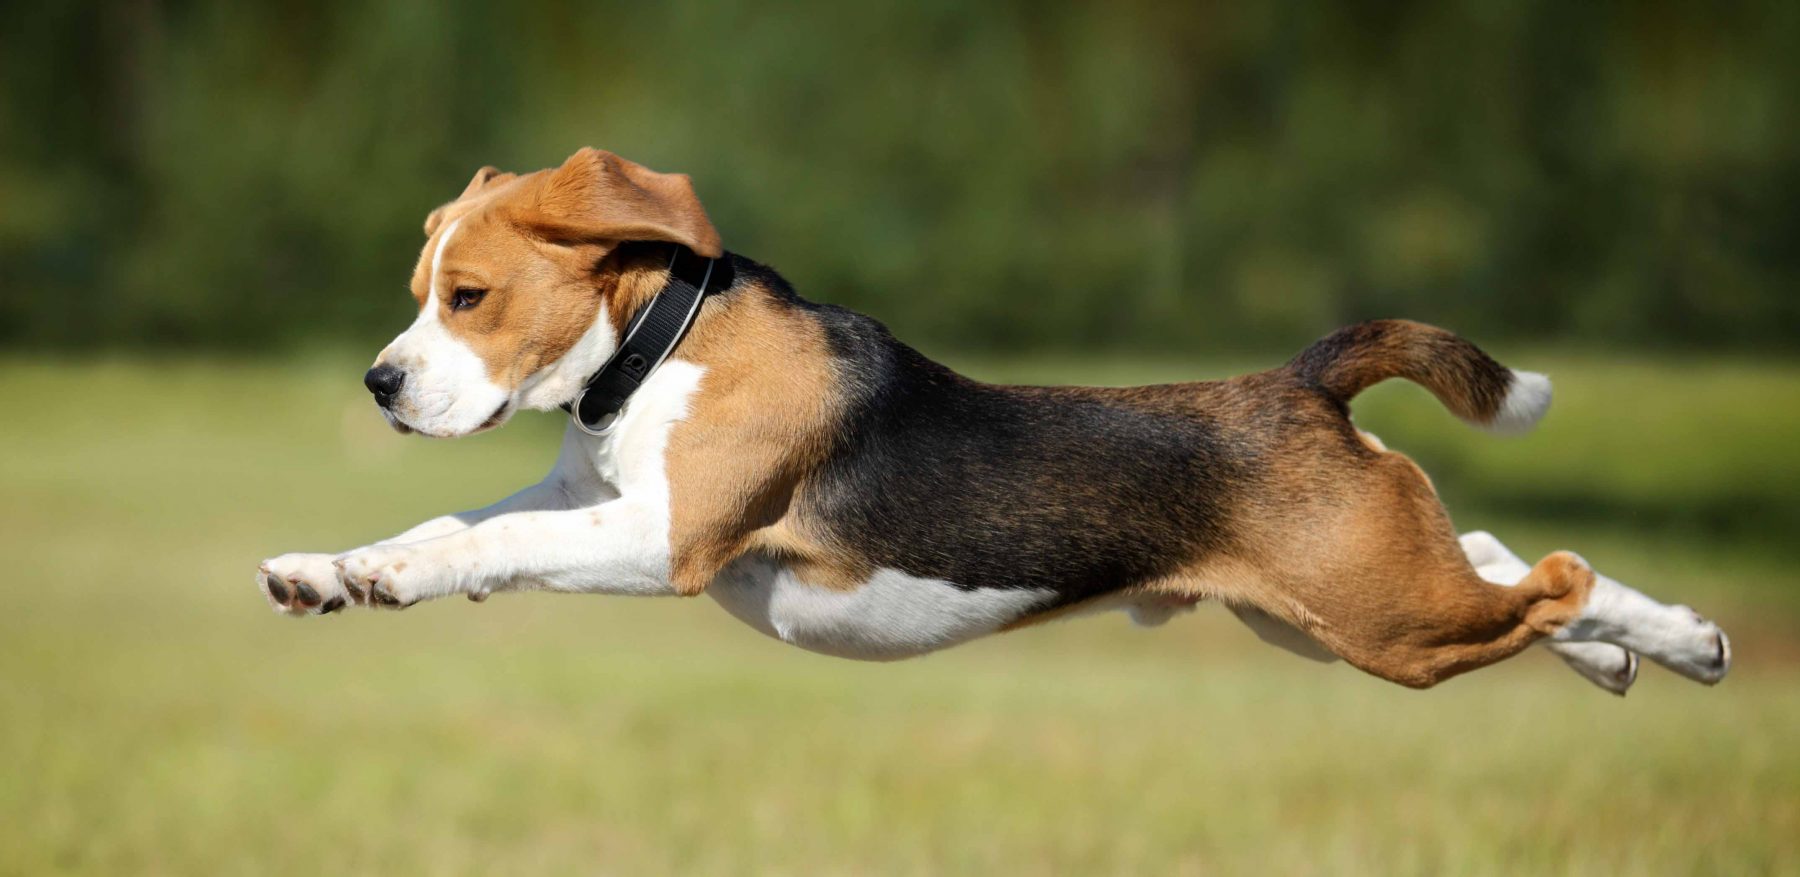 Happy Dog Running on a Field